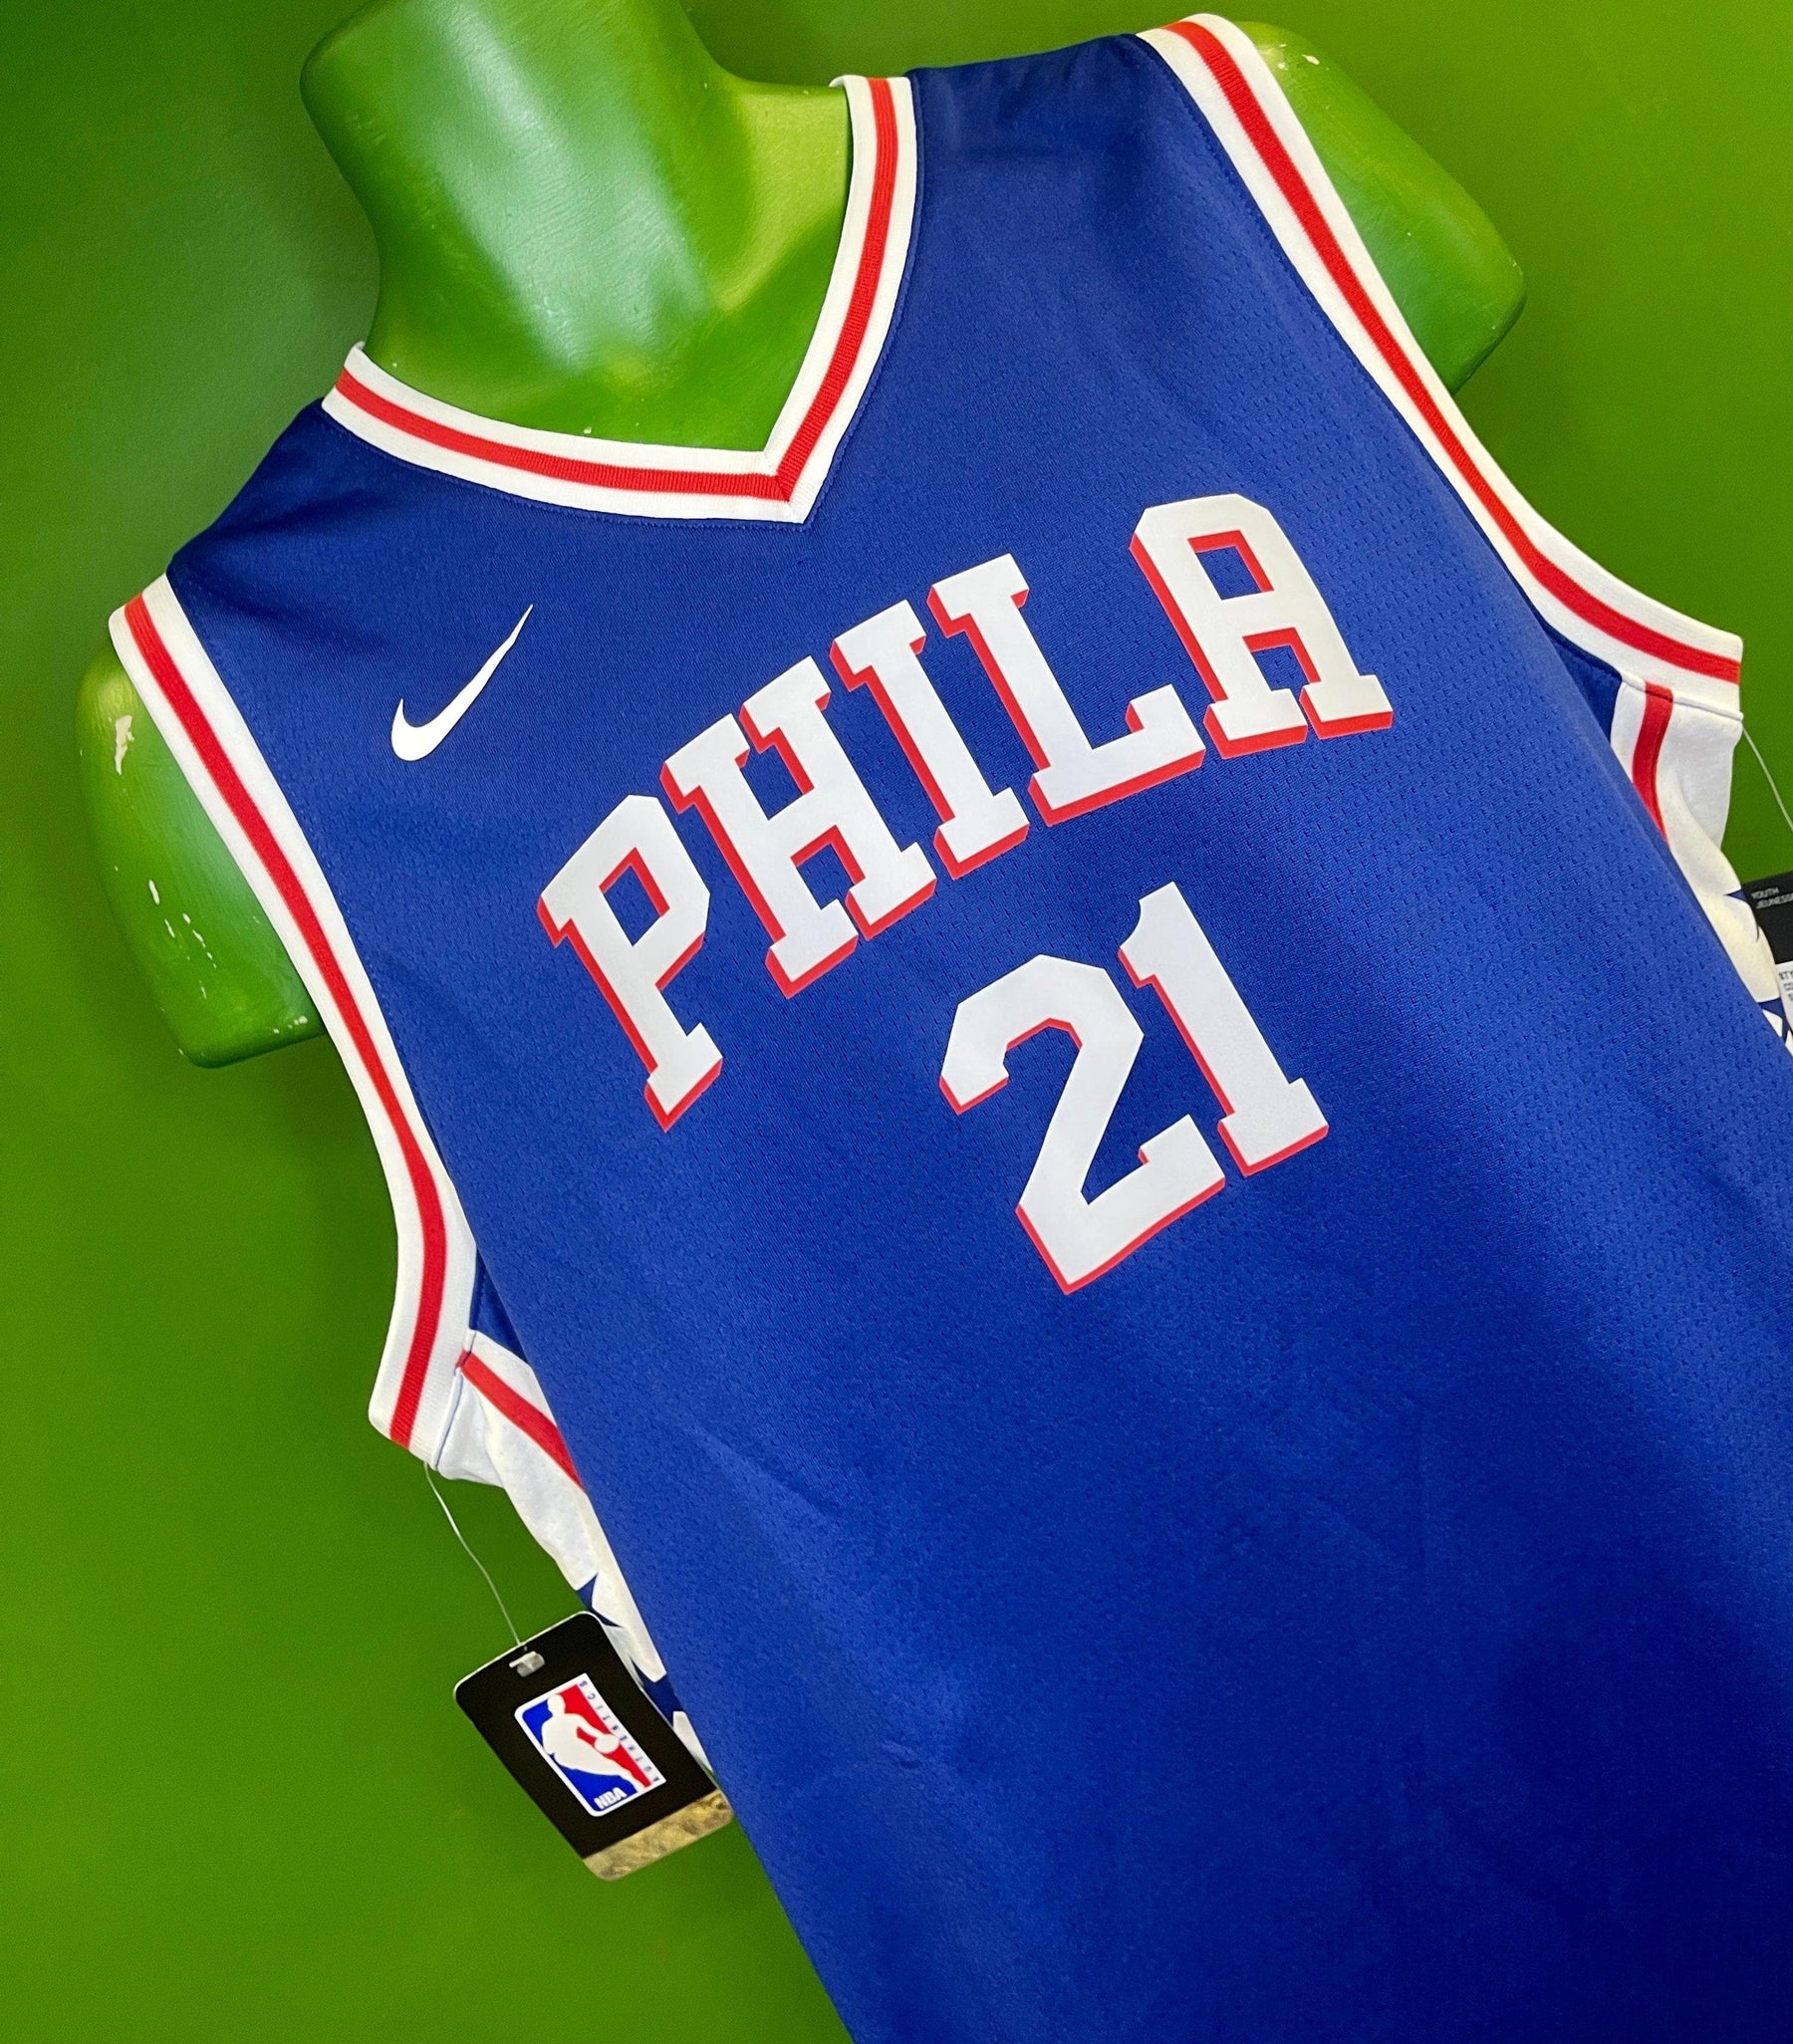 NBA Philadelphia 76ers Joel Embiid #21 2021/22 Player Jersey Youth X-Large 18-20 NWT